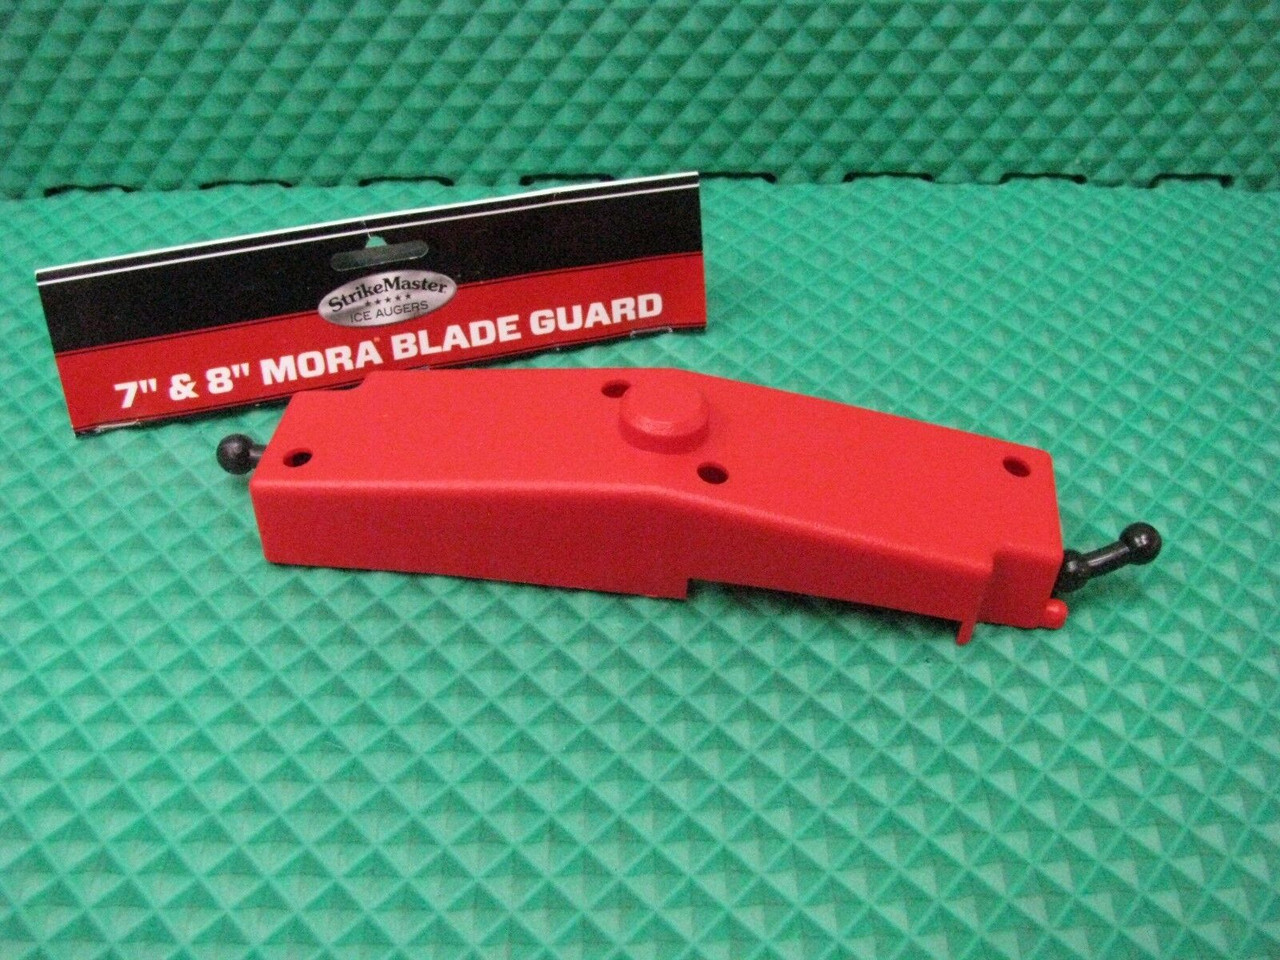 StrikeMaster Mora Auger Blade Guard 6" Drill Bg-6 for sale online